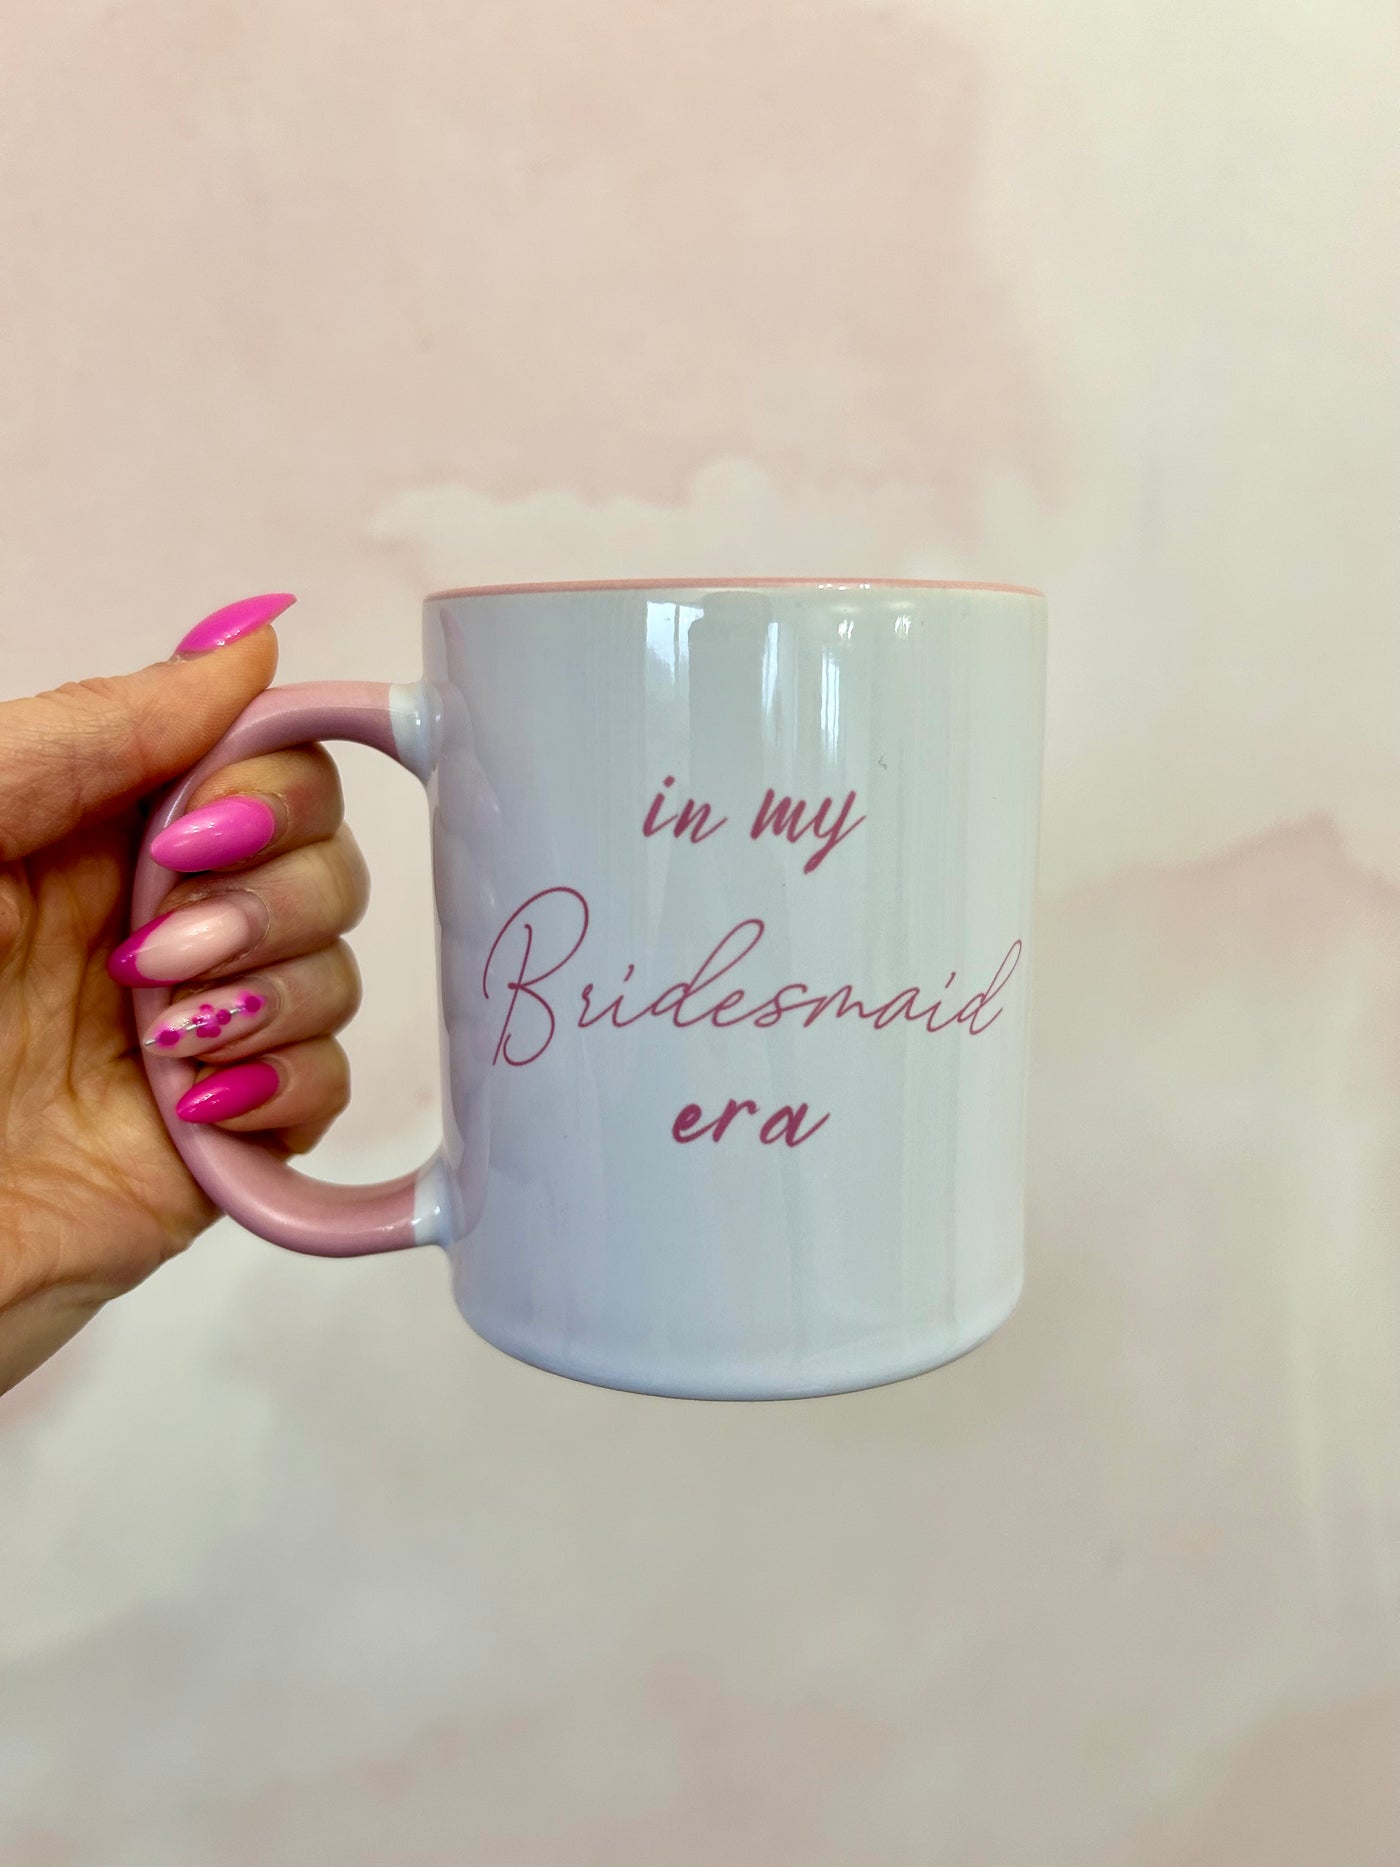 In my Bridesmaid era pink mug